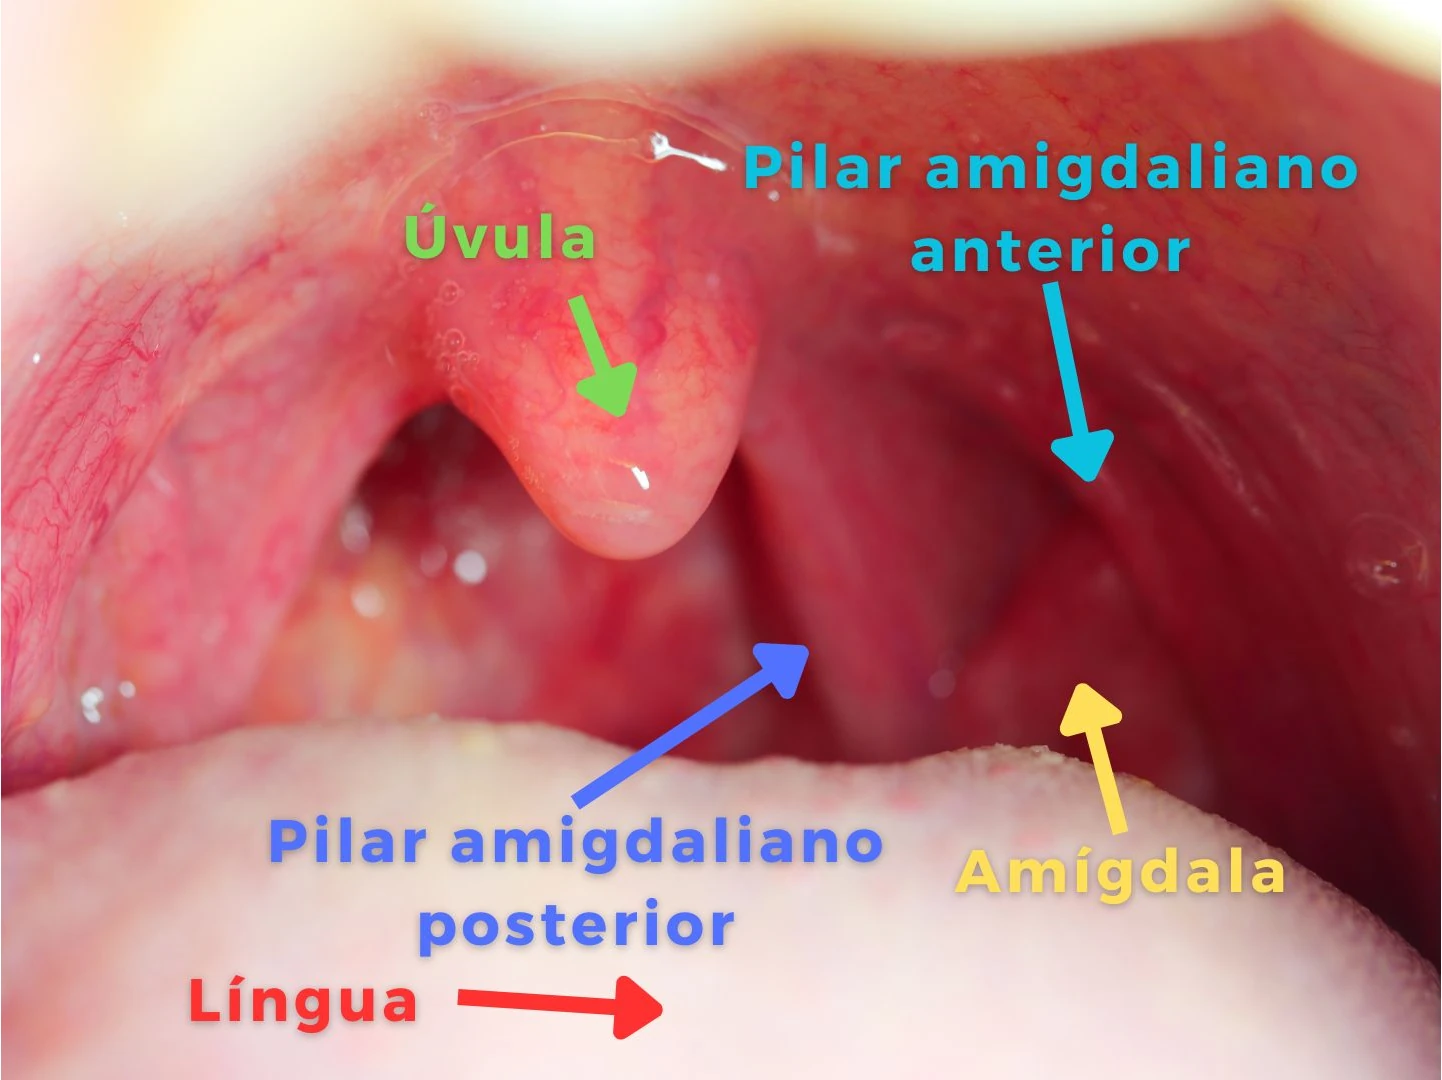 Anatomia das amigdalas